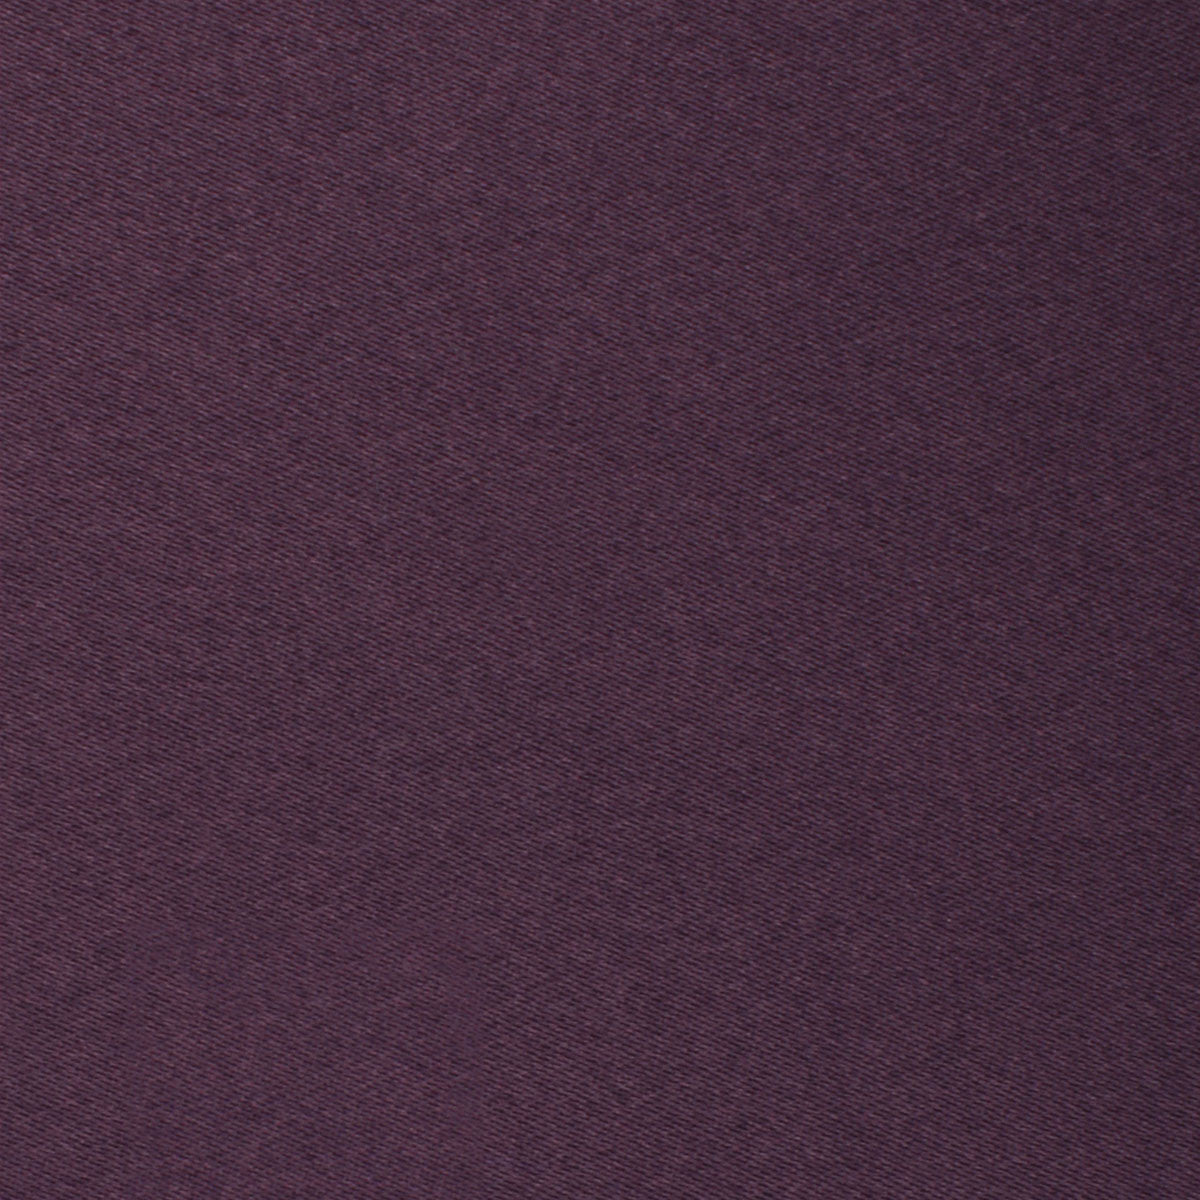 Aubergine Purple Satin Kids Bow Tie Fabric